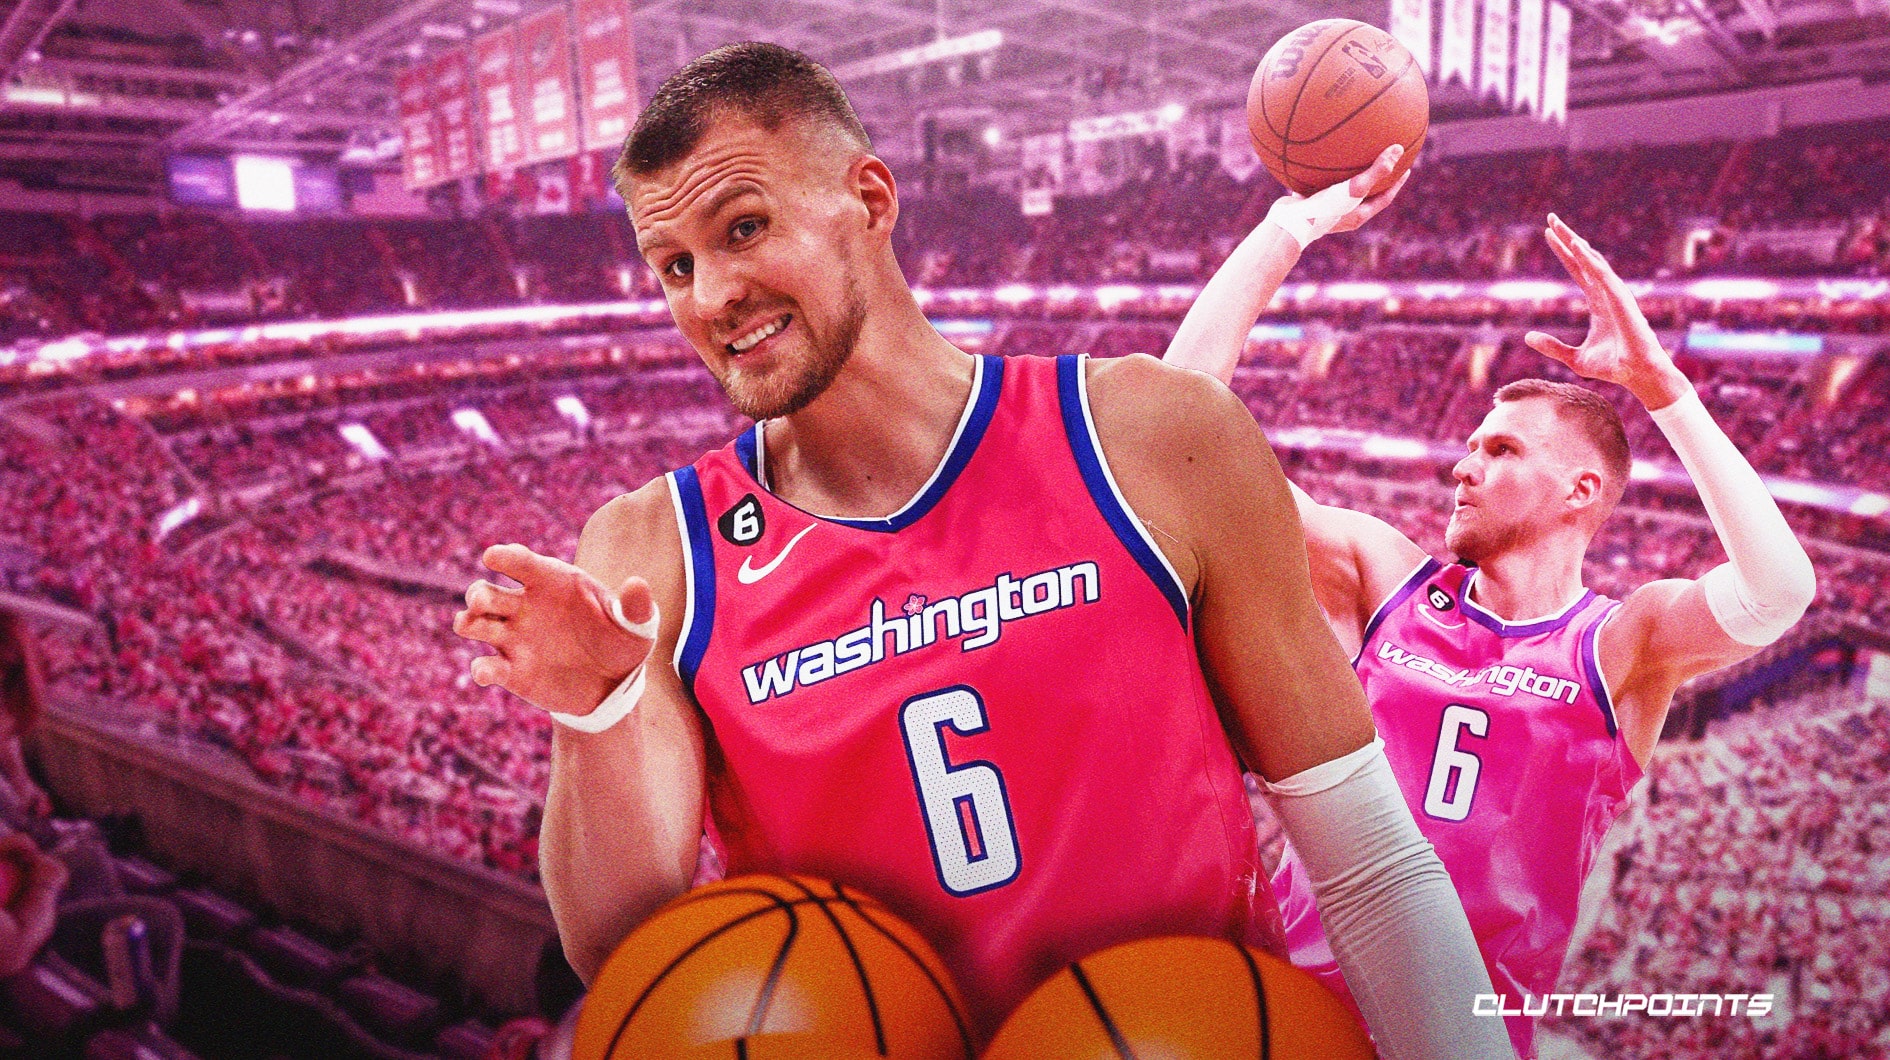 Washington Wizards: I have to be honest - thePeachBasket